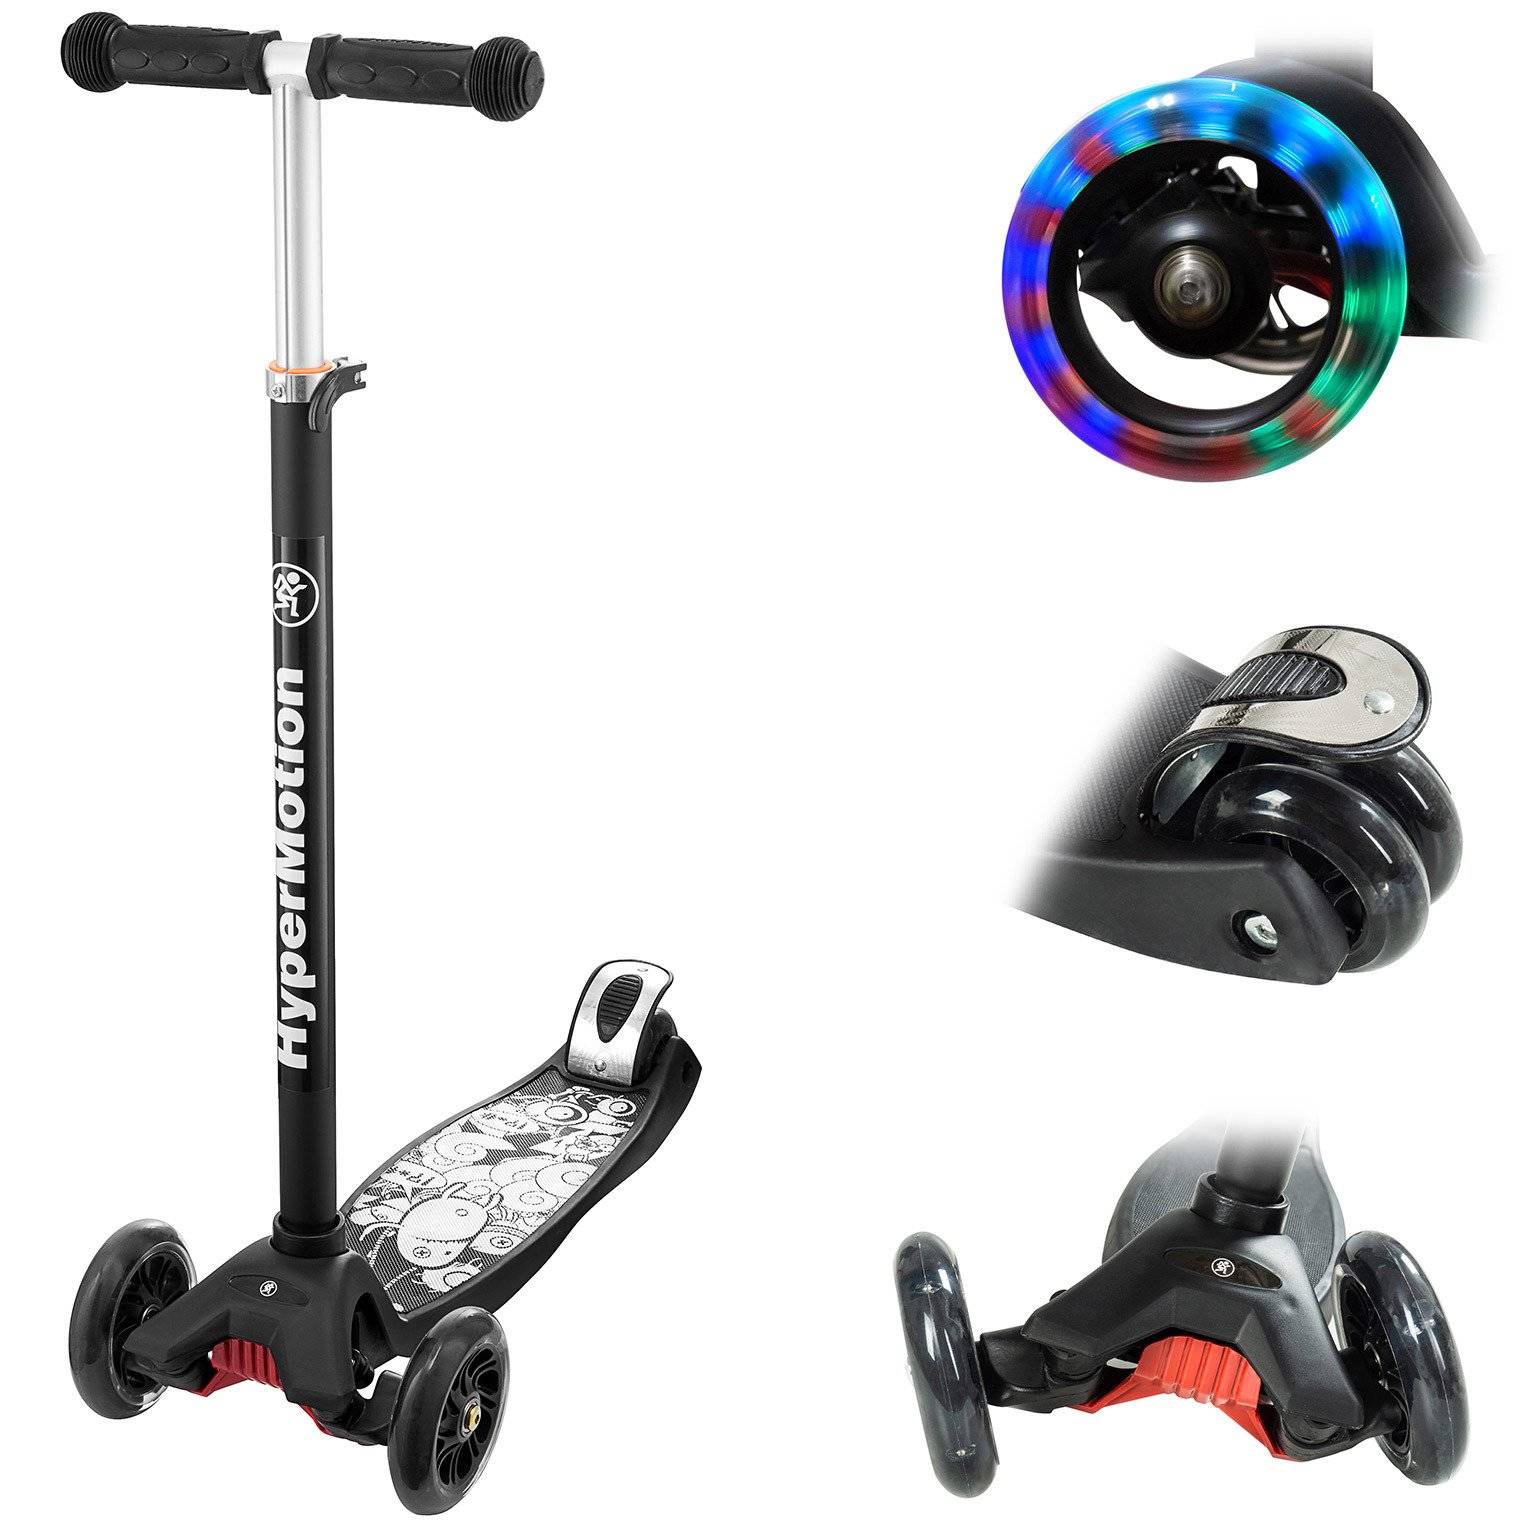 ALAMO three-wheel balance scooter - Black + LED wheels